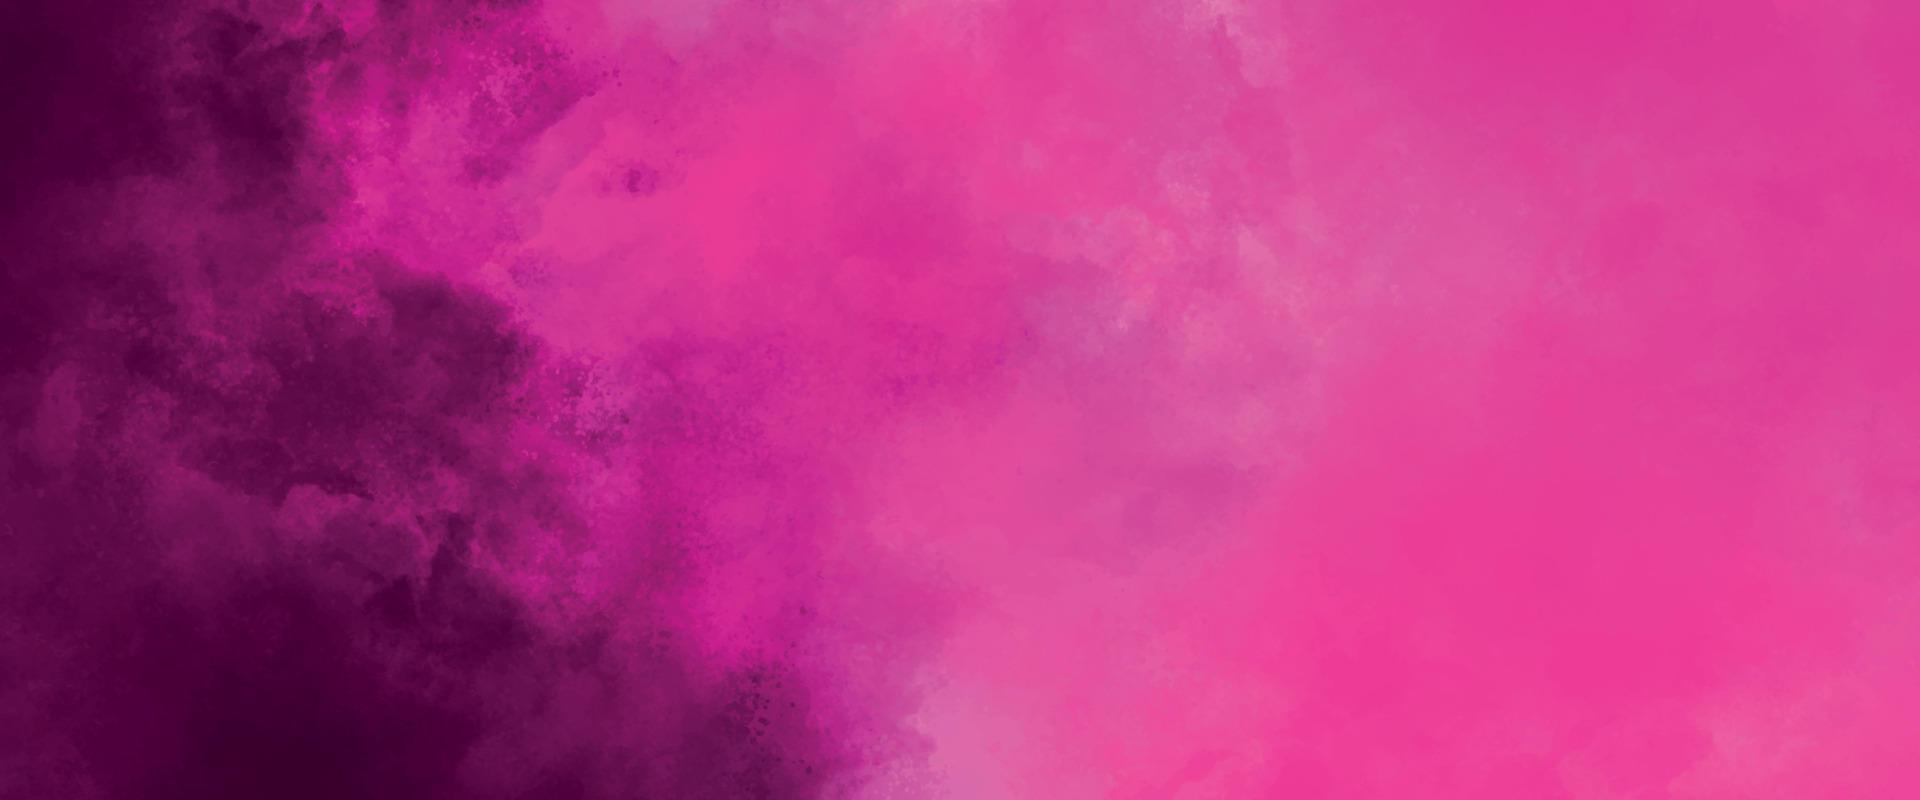 fundo abstrato aquarela rosa. aquarela artística abstrata pincelada rosa isolada no fundo branco. projeto colorido do grunge. vetor